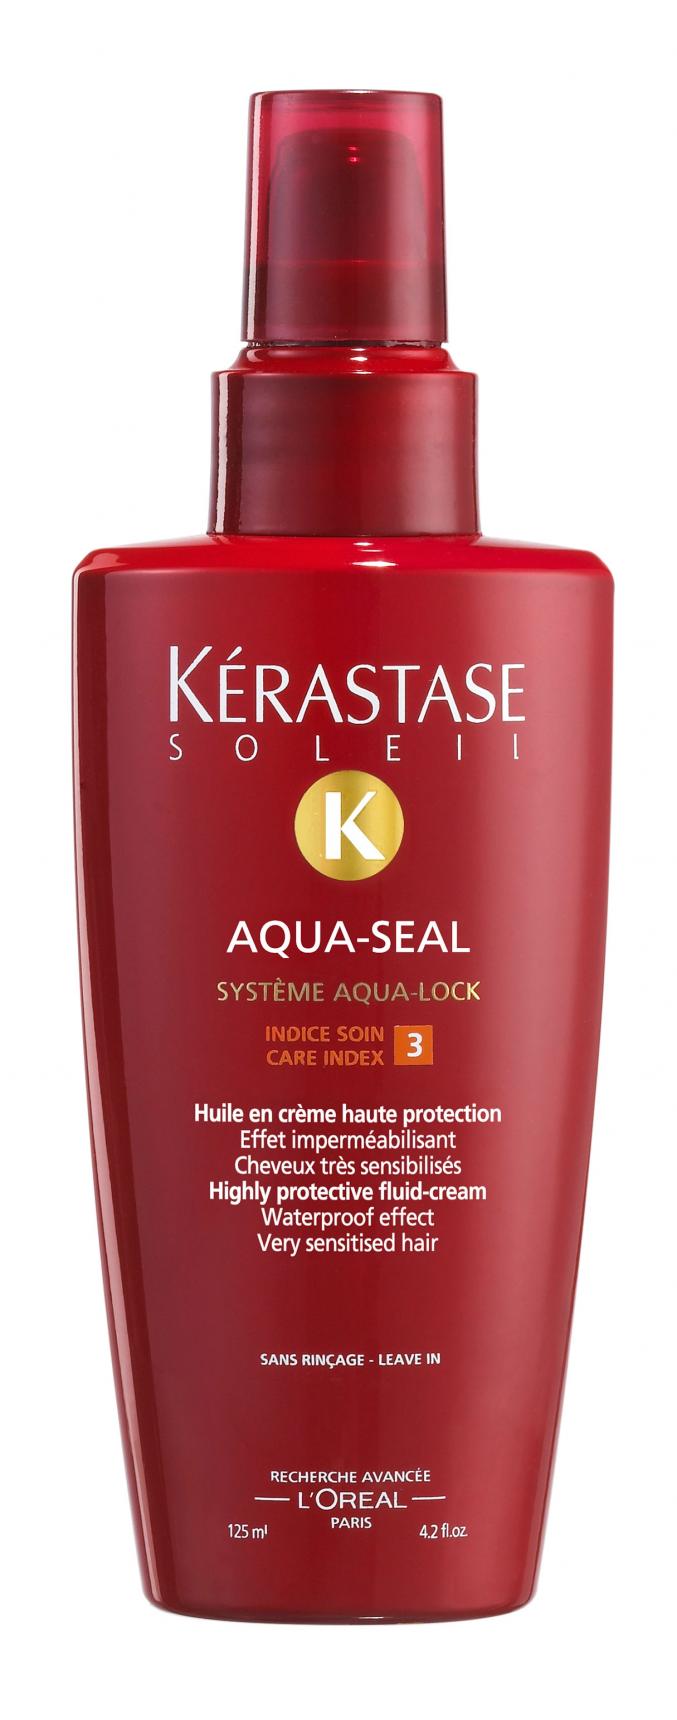 Aqua-Seal (Kérastase)